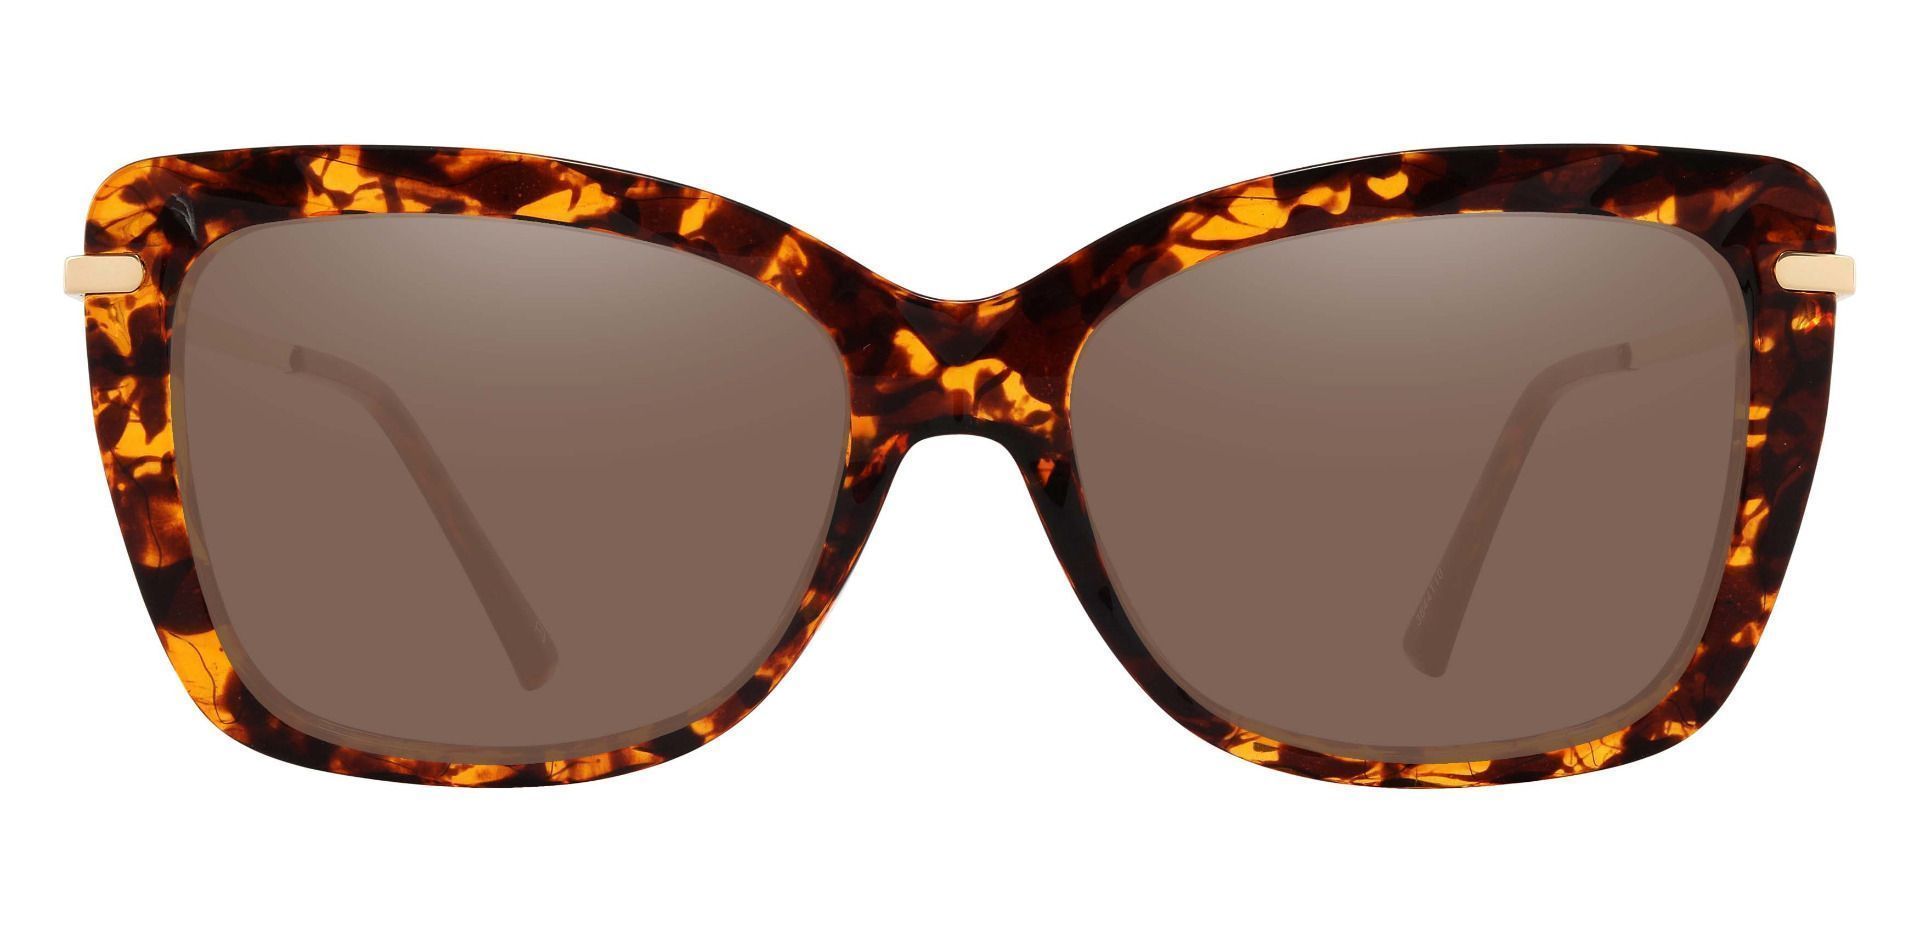 Shoshanna Rectangle Non-Rx Sunglasses - Tortoise Frame With Brown Lenses